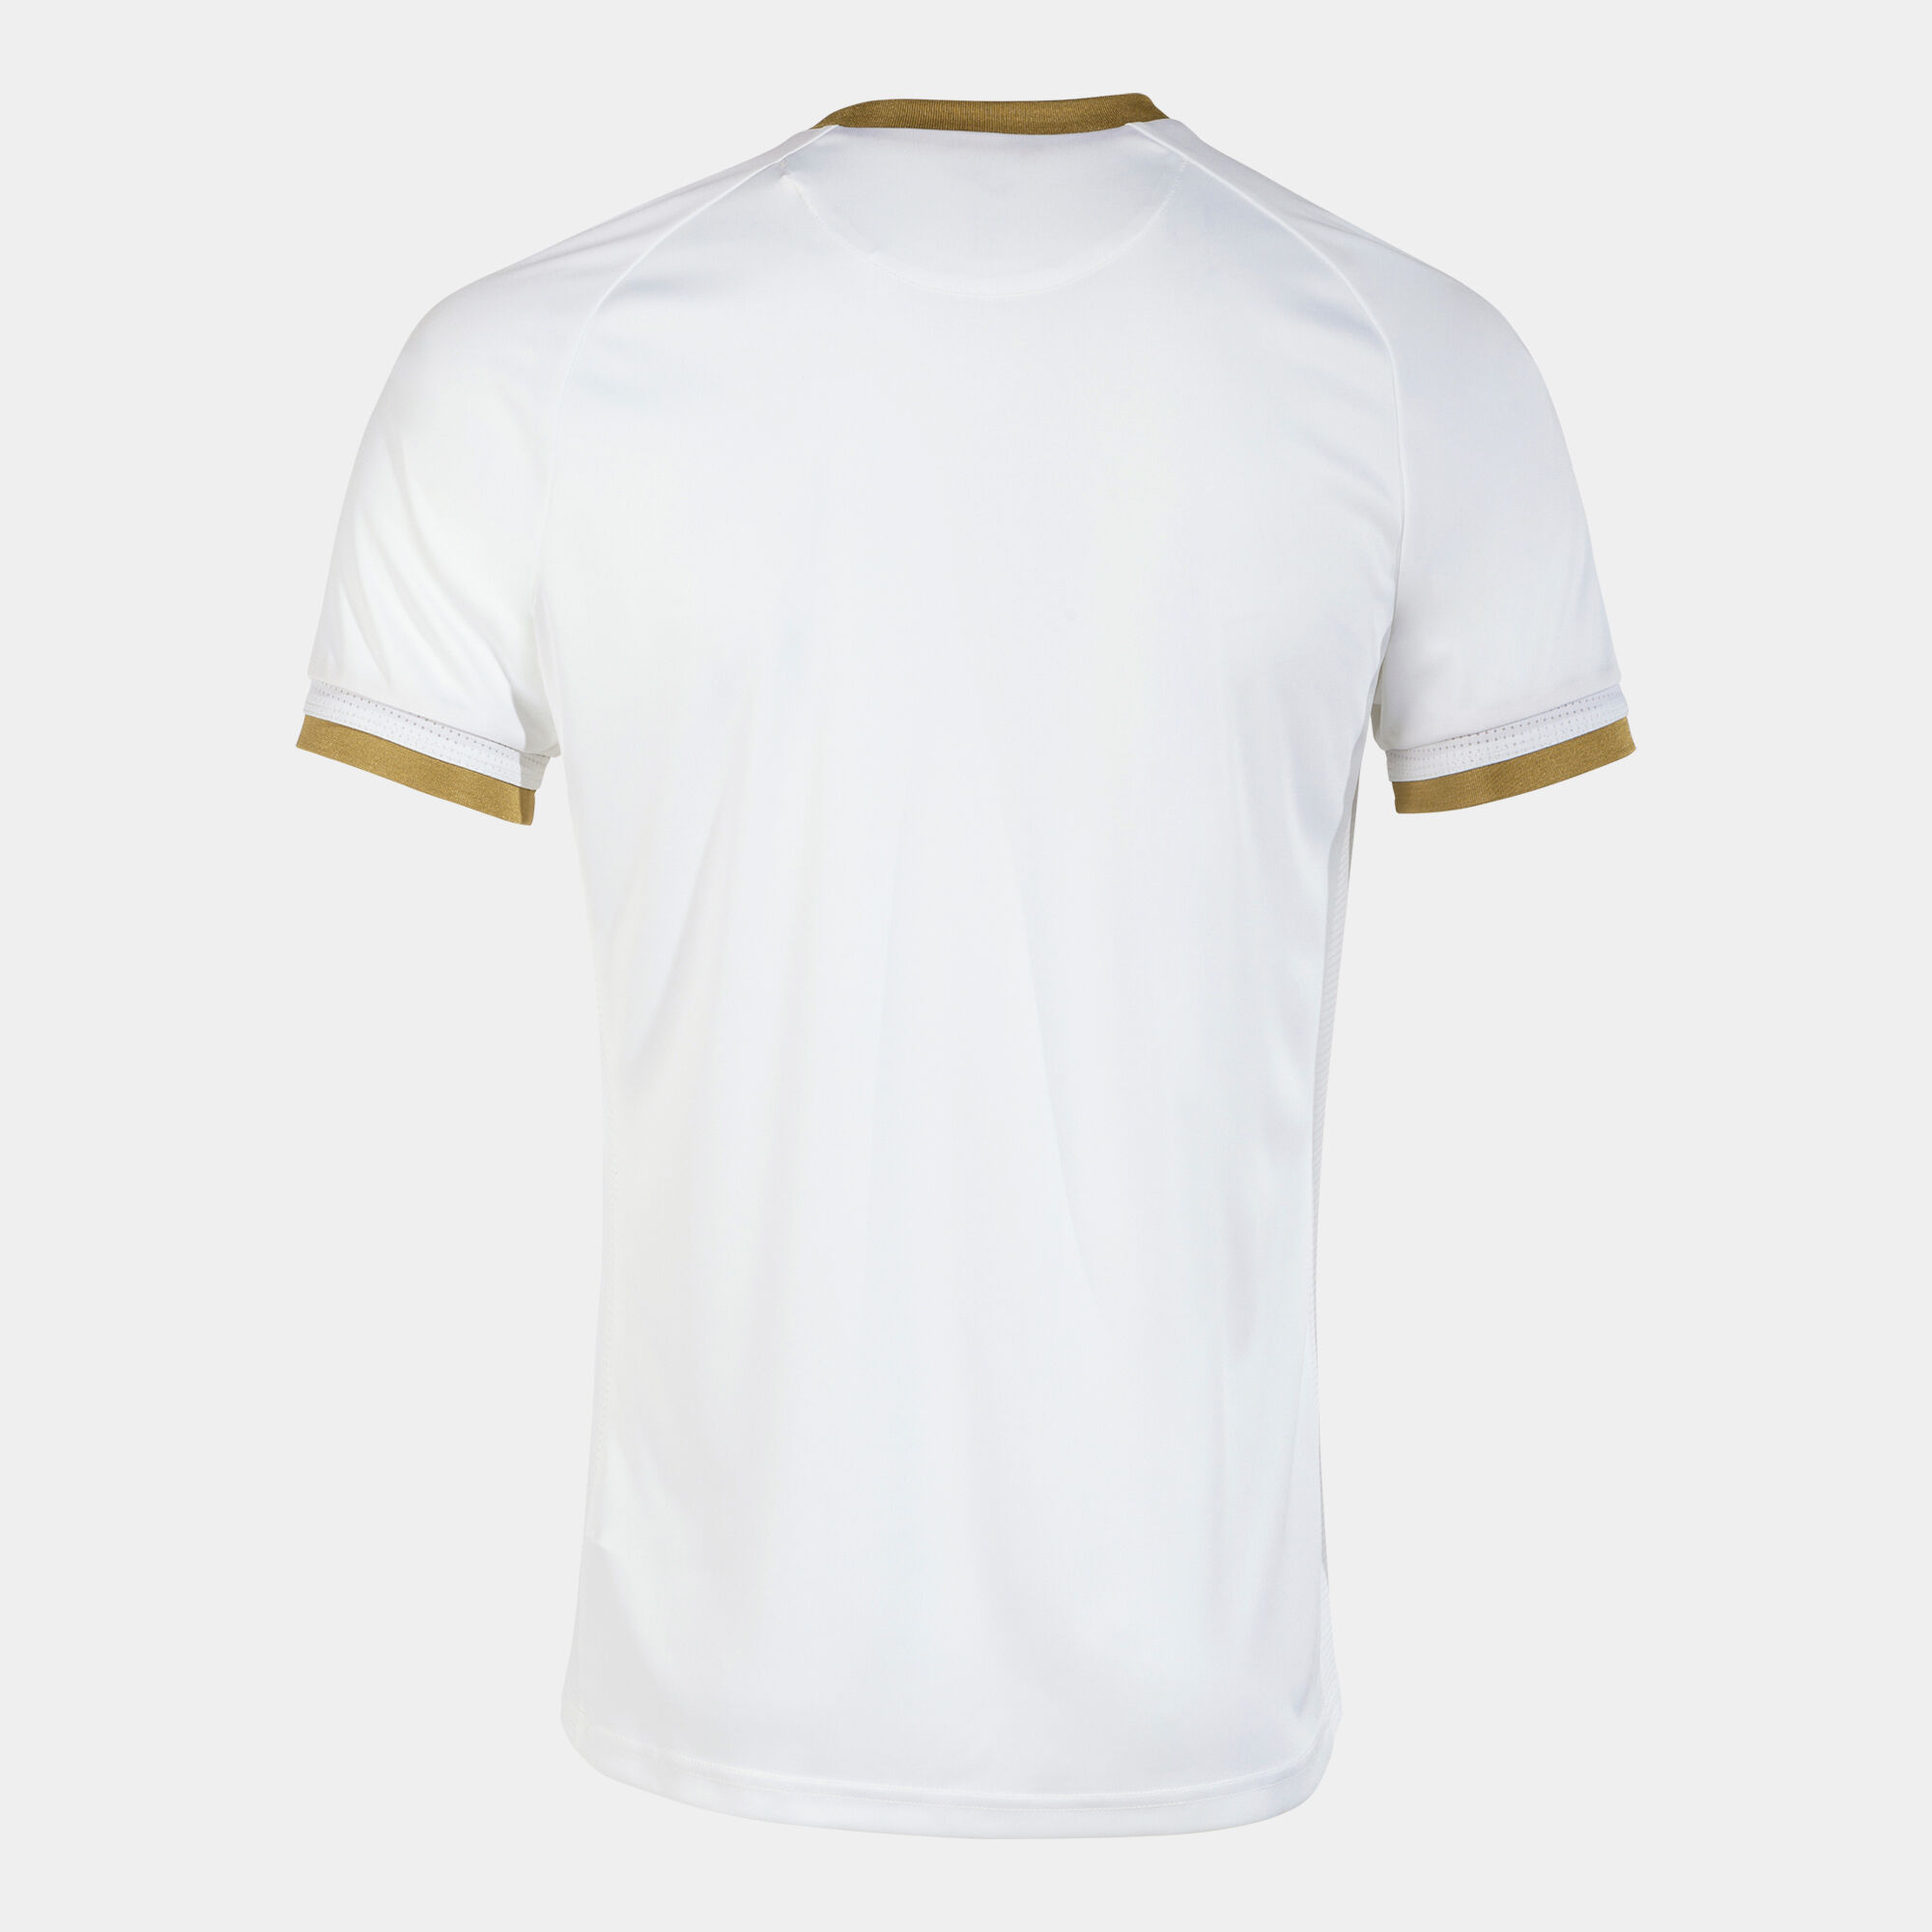 Camiseta manga corta hombre Gold V blanco